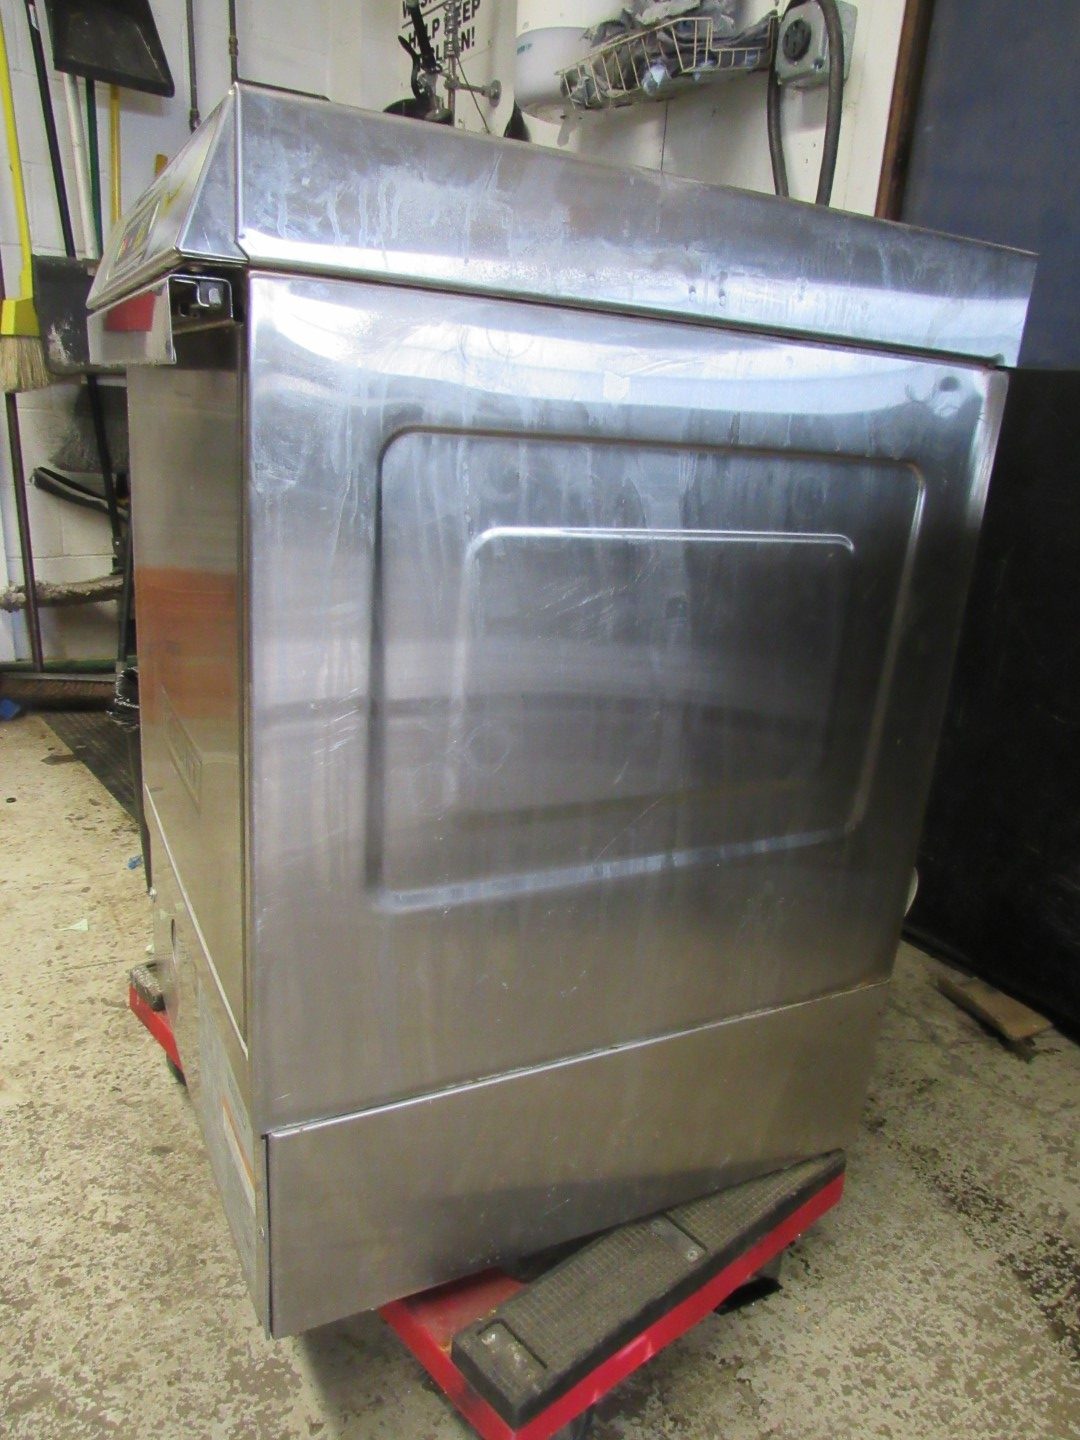 Hobart LXIC Dishwasher 115 Volt S 23-1119-627 10